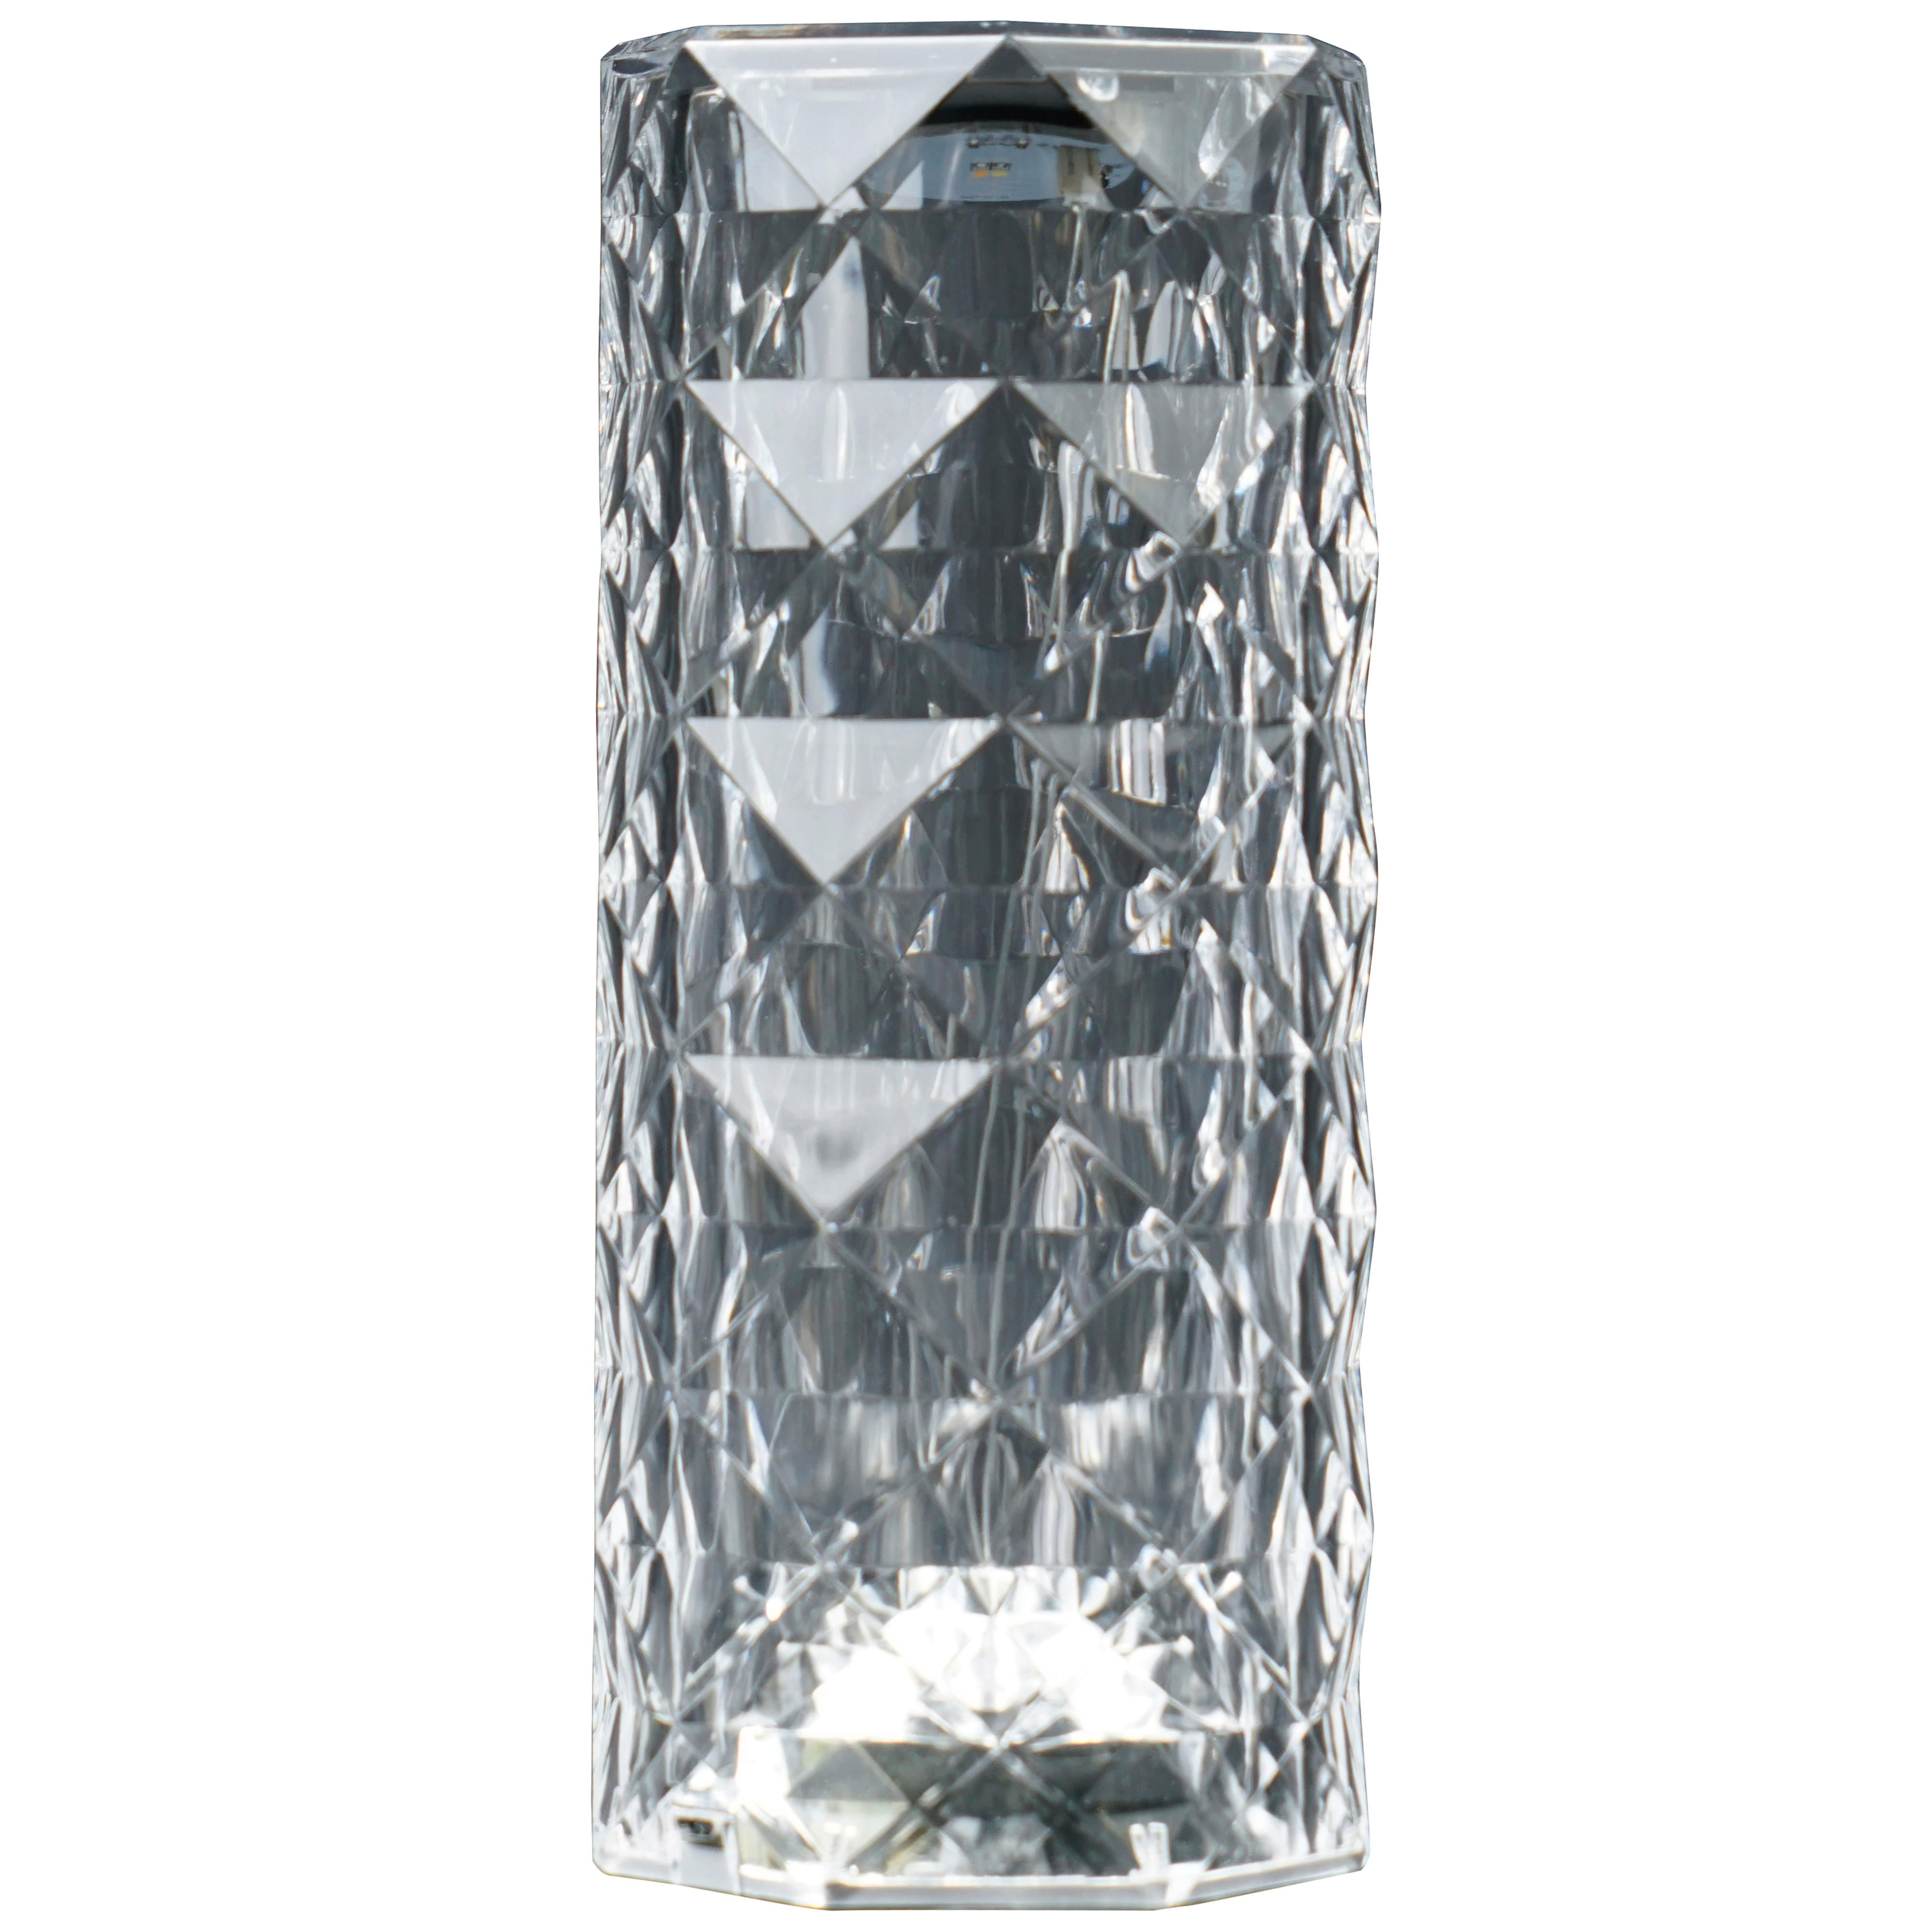 LED-DEKORATIONSLAMPA 9/22 cm   - transparent, Lifestyle, plast (9/22cm) - Best Price